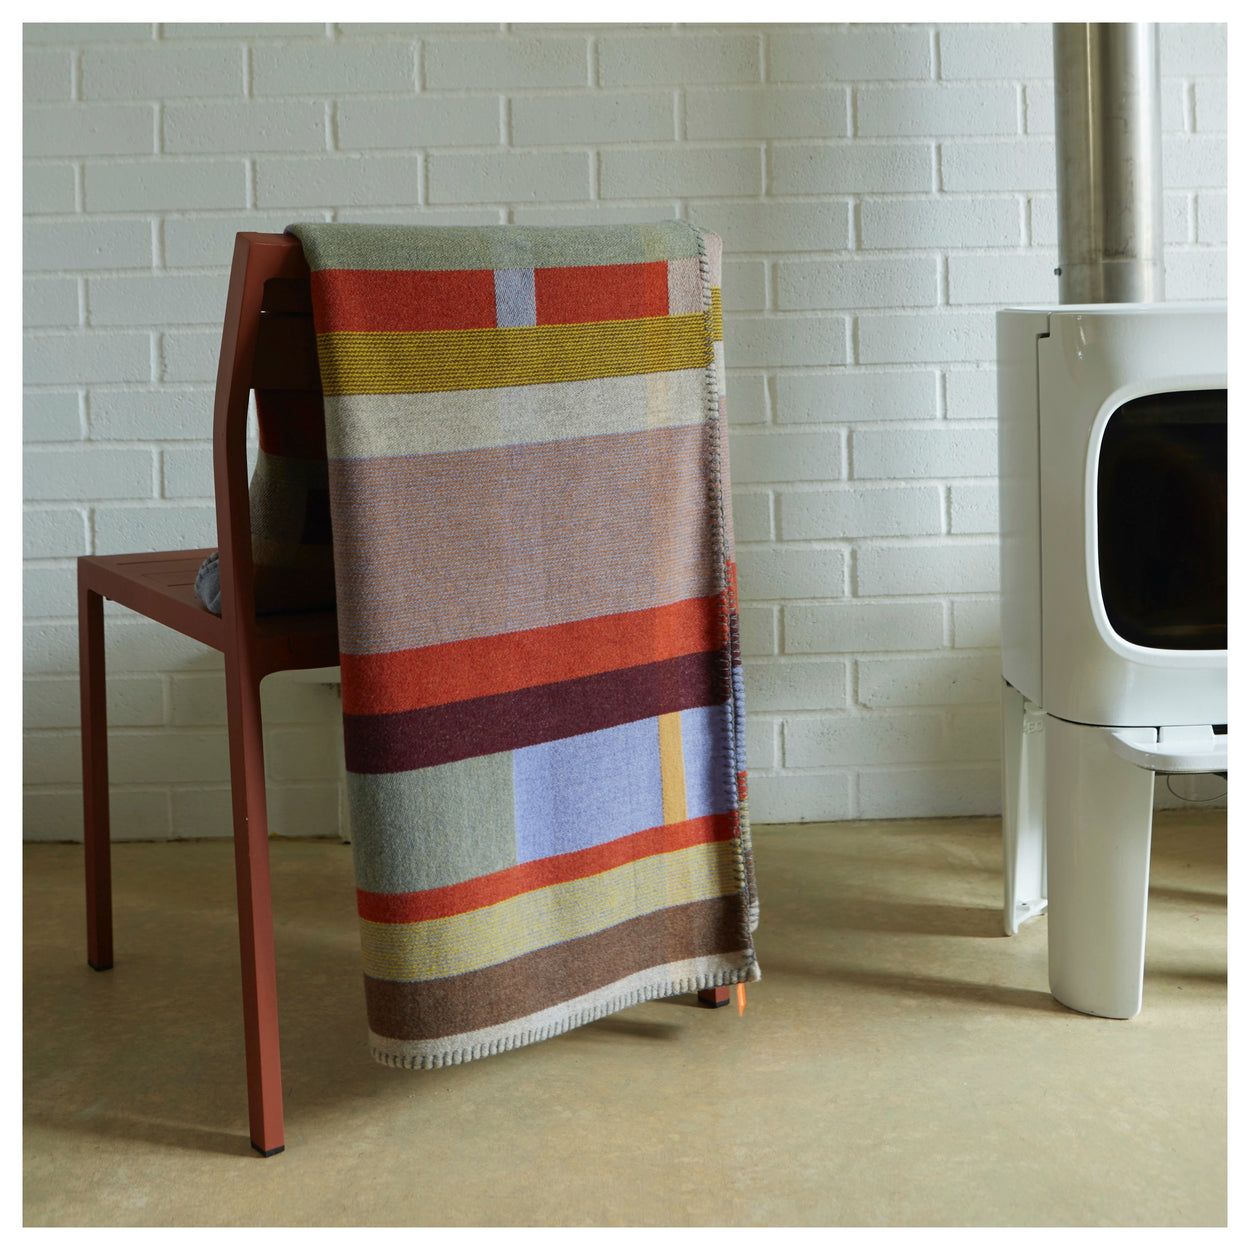 Cecil Orange and brown Premium Merino Lambswool wool throw blanket on chair